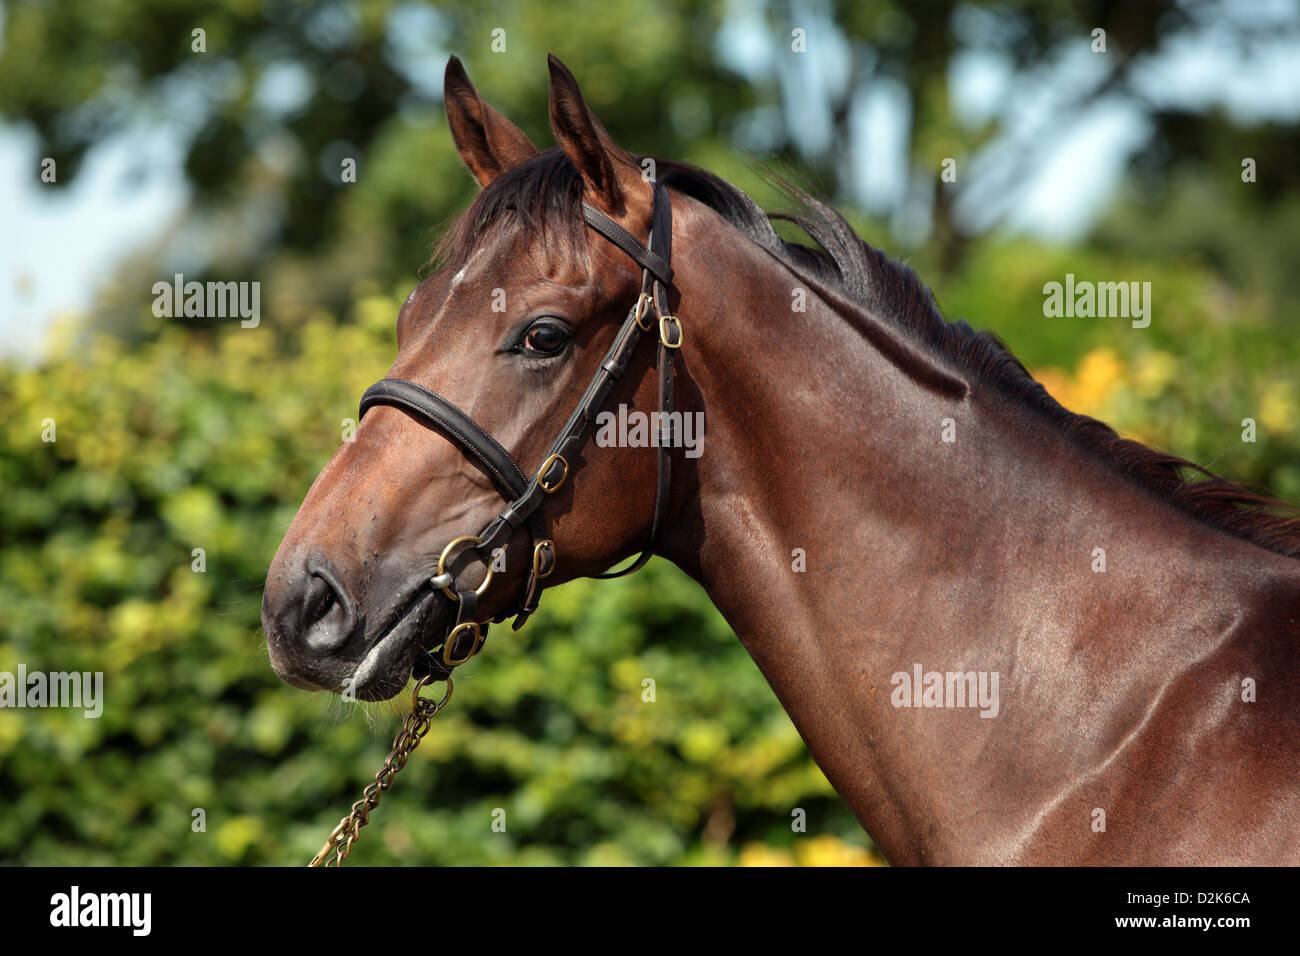 Görlsdorf, Germany, Thoroughbred horse portrait Stock Photo